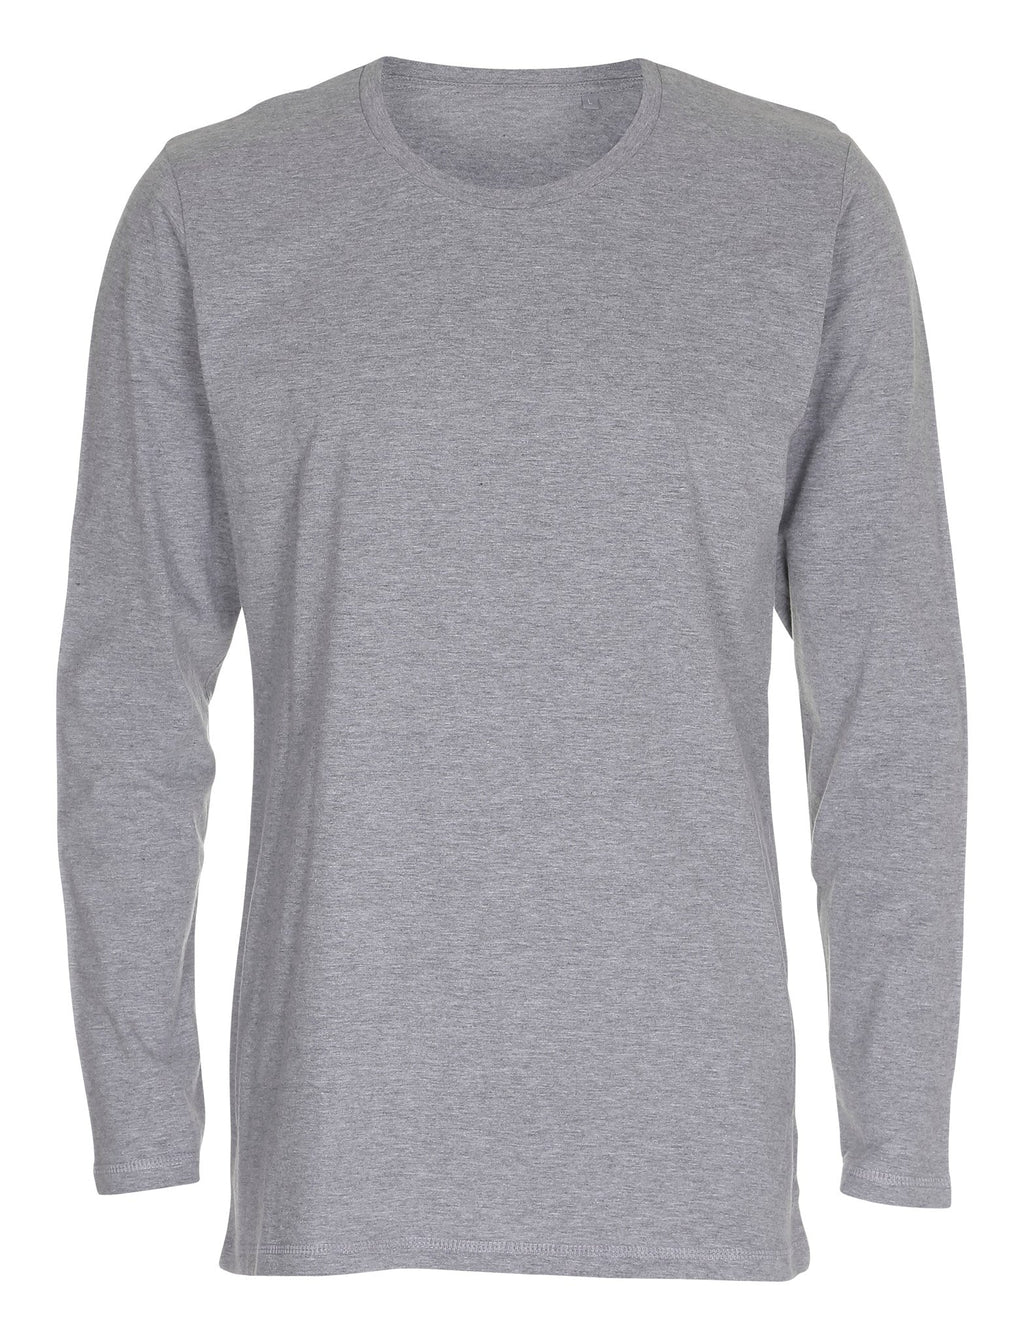 Camiseta básica de manga larga-gris